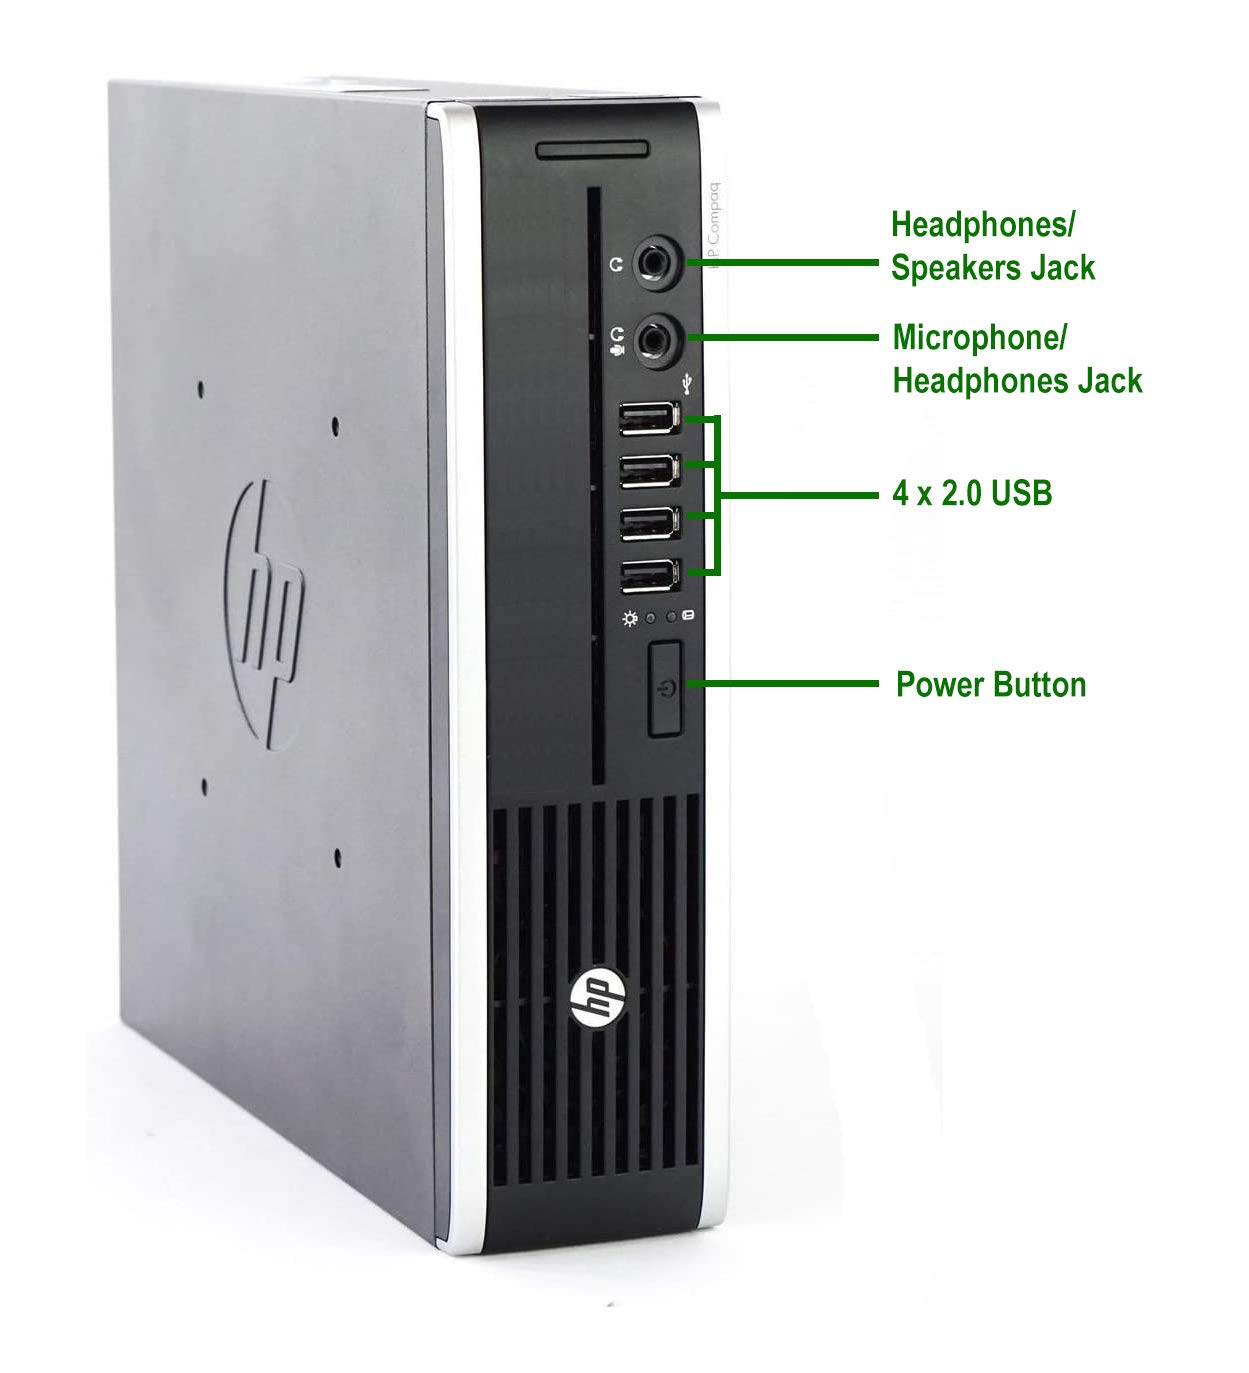 HP 8300 USFF Computer Desktop PC, Intel Core i5 3.2GHz Processor, 8GB Ram, 500GB Hard Drive, WiFi | Bluetooth, 1080p Webcam, Wireless Keyboard & Mouse, 19 Inch Monitor, Windows 10 (Renewed)